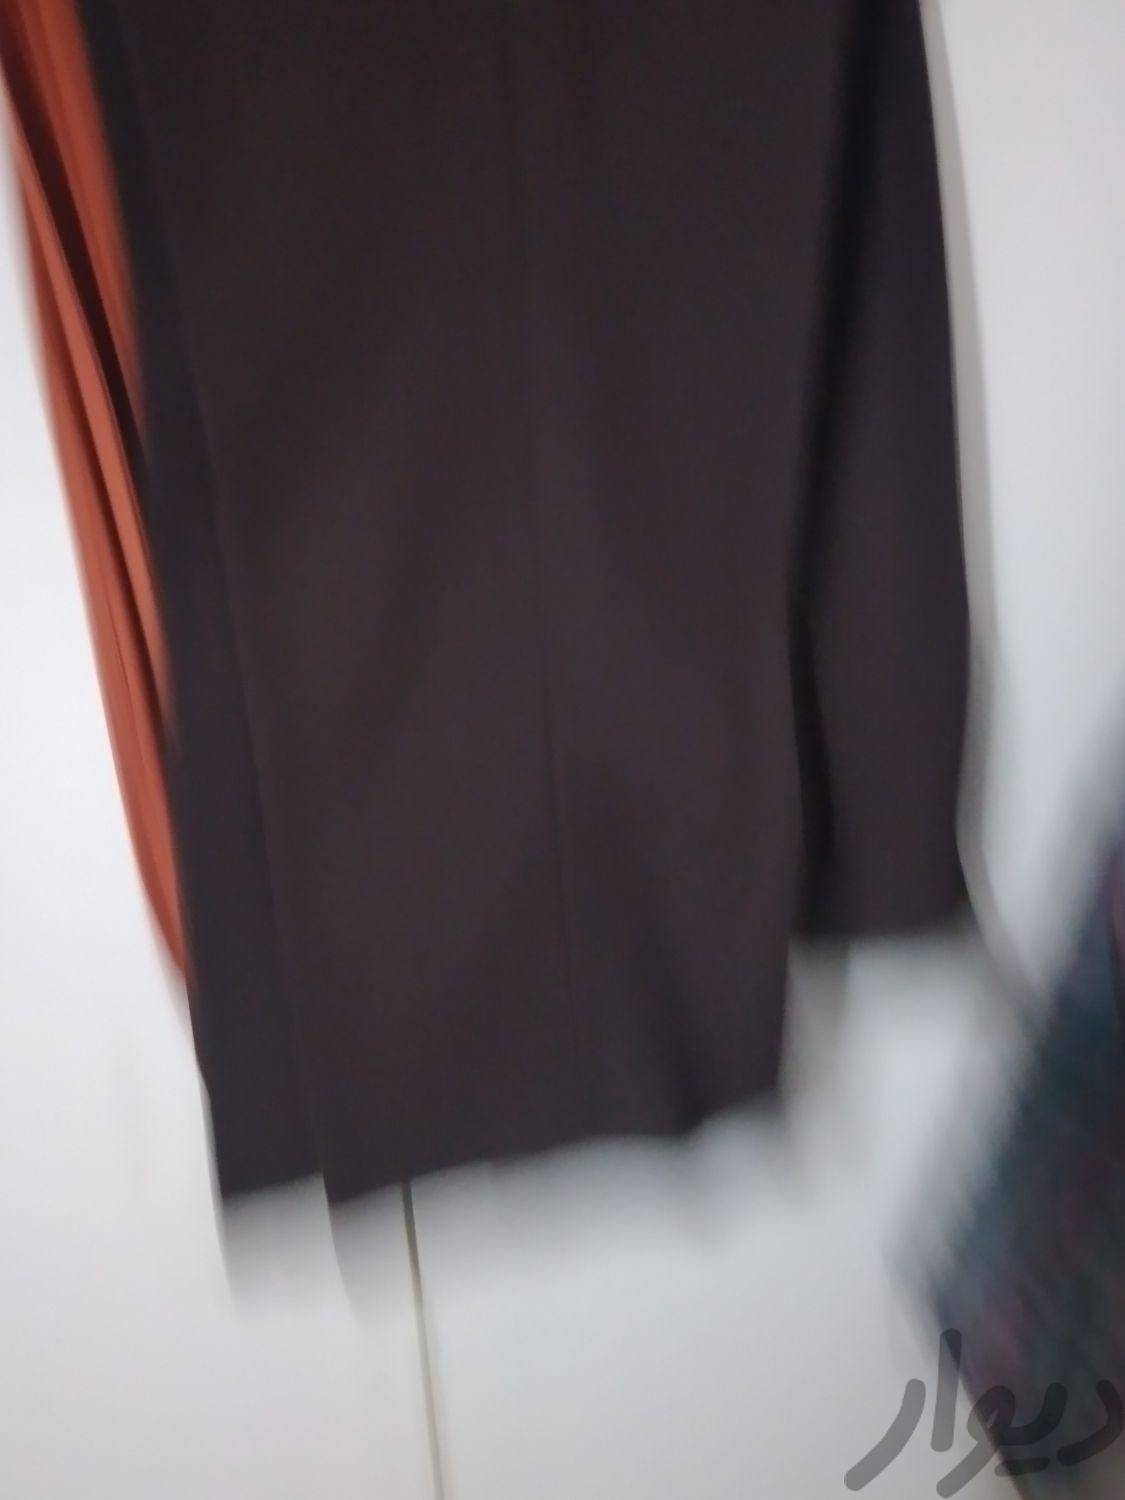 شلوار  کرپ  گاواردین  سایز  ۴۰  رنگ  قهوه  ای|لباس|اراک, |دیوار